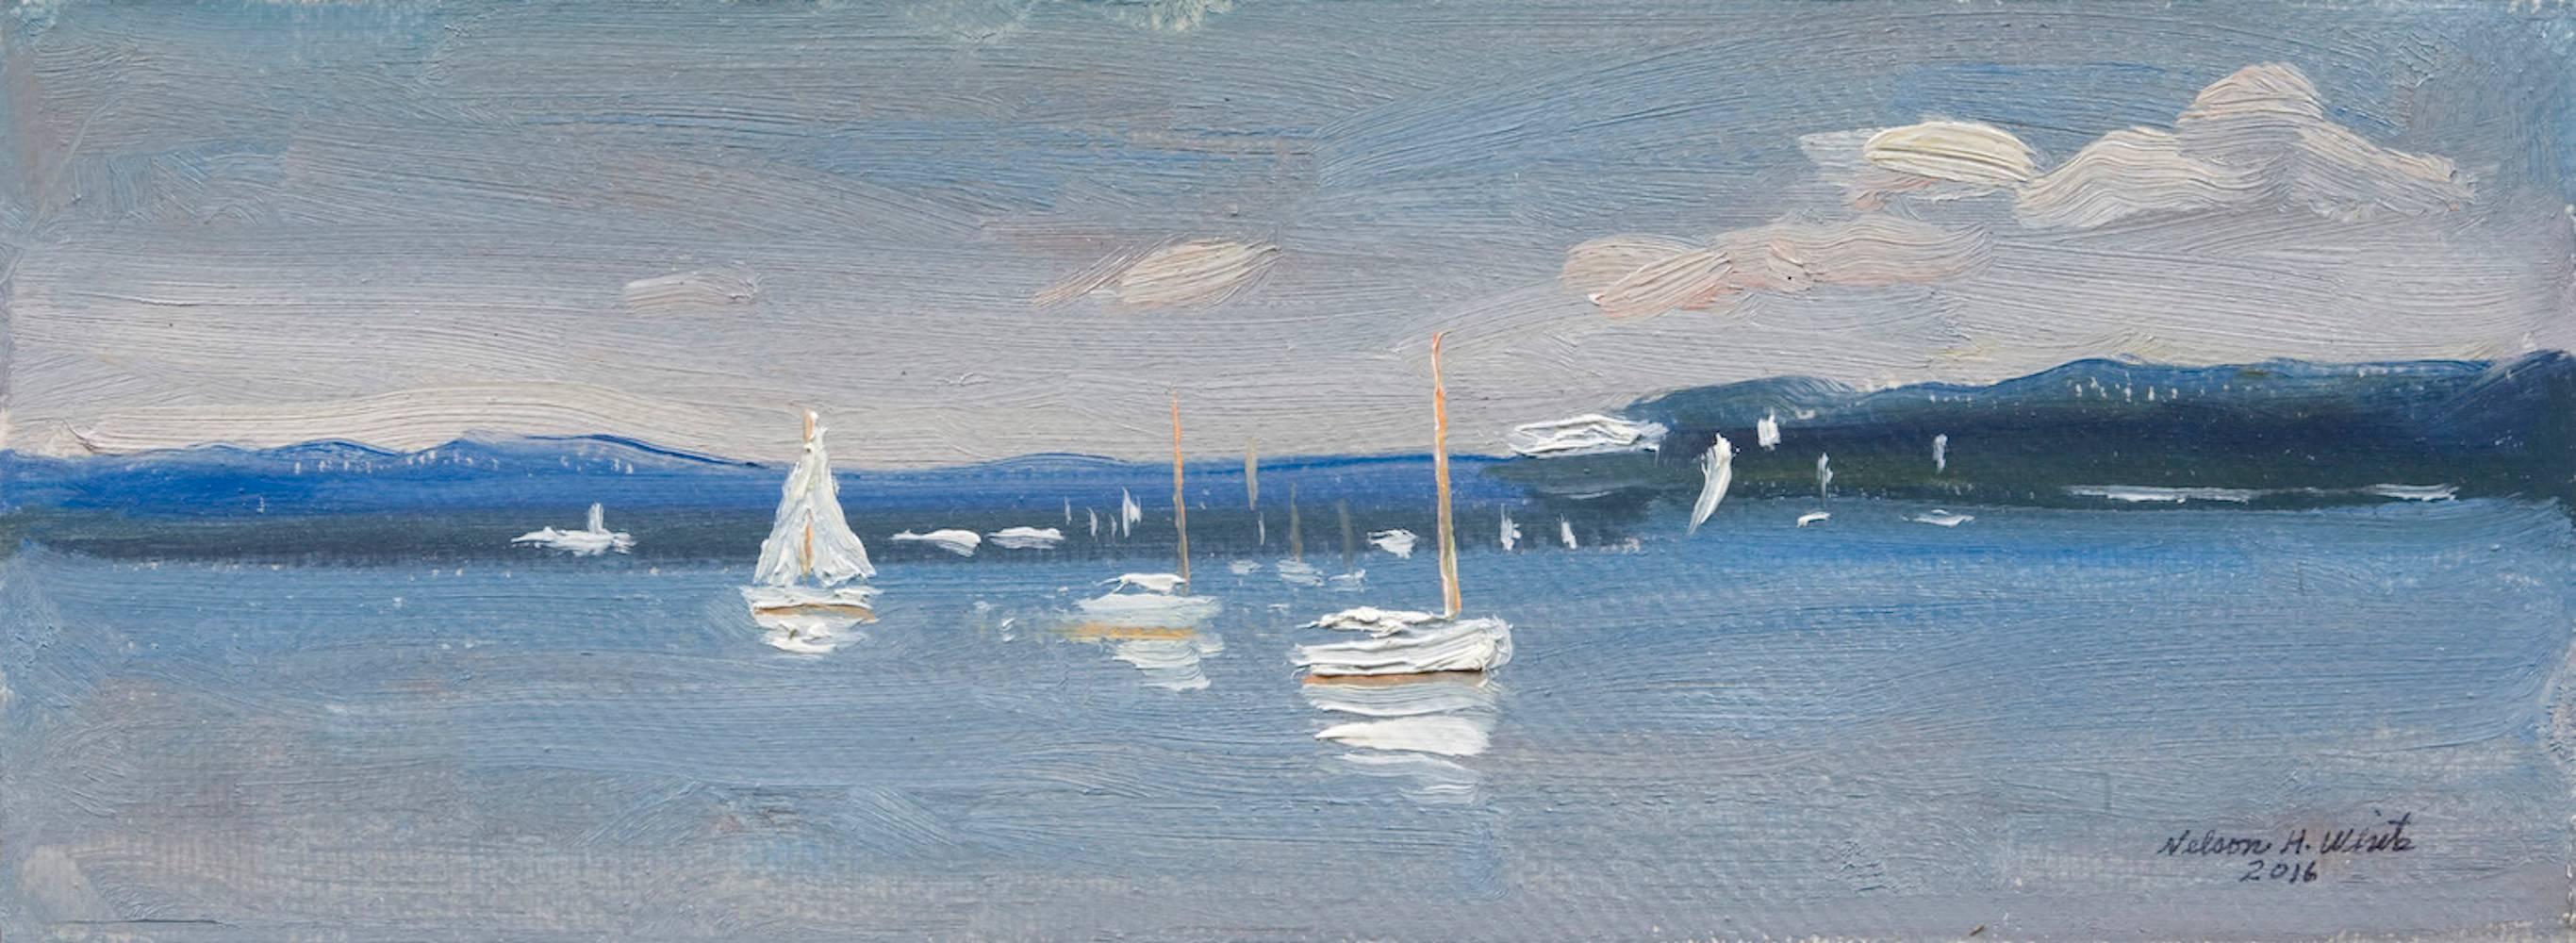 Nelson H. White Landscape Painting - Dering Harbor